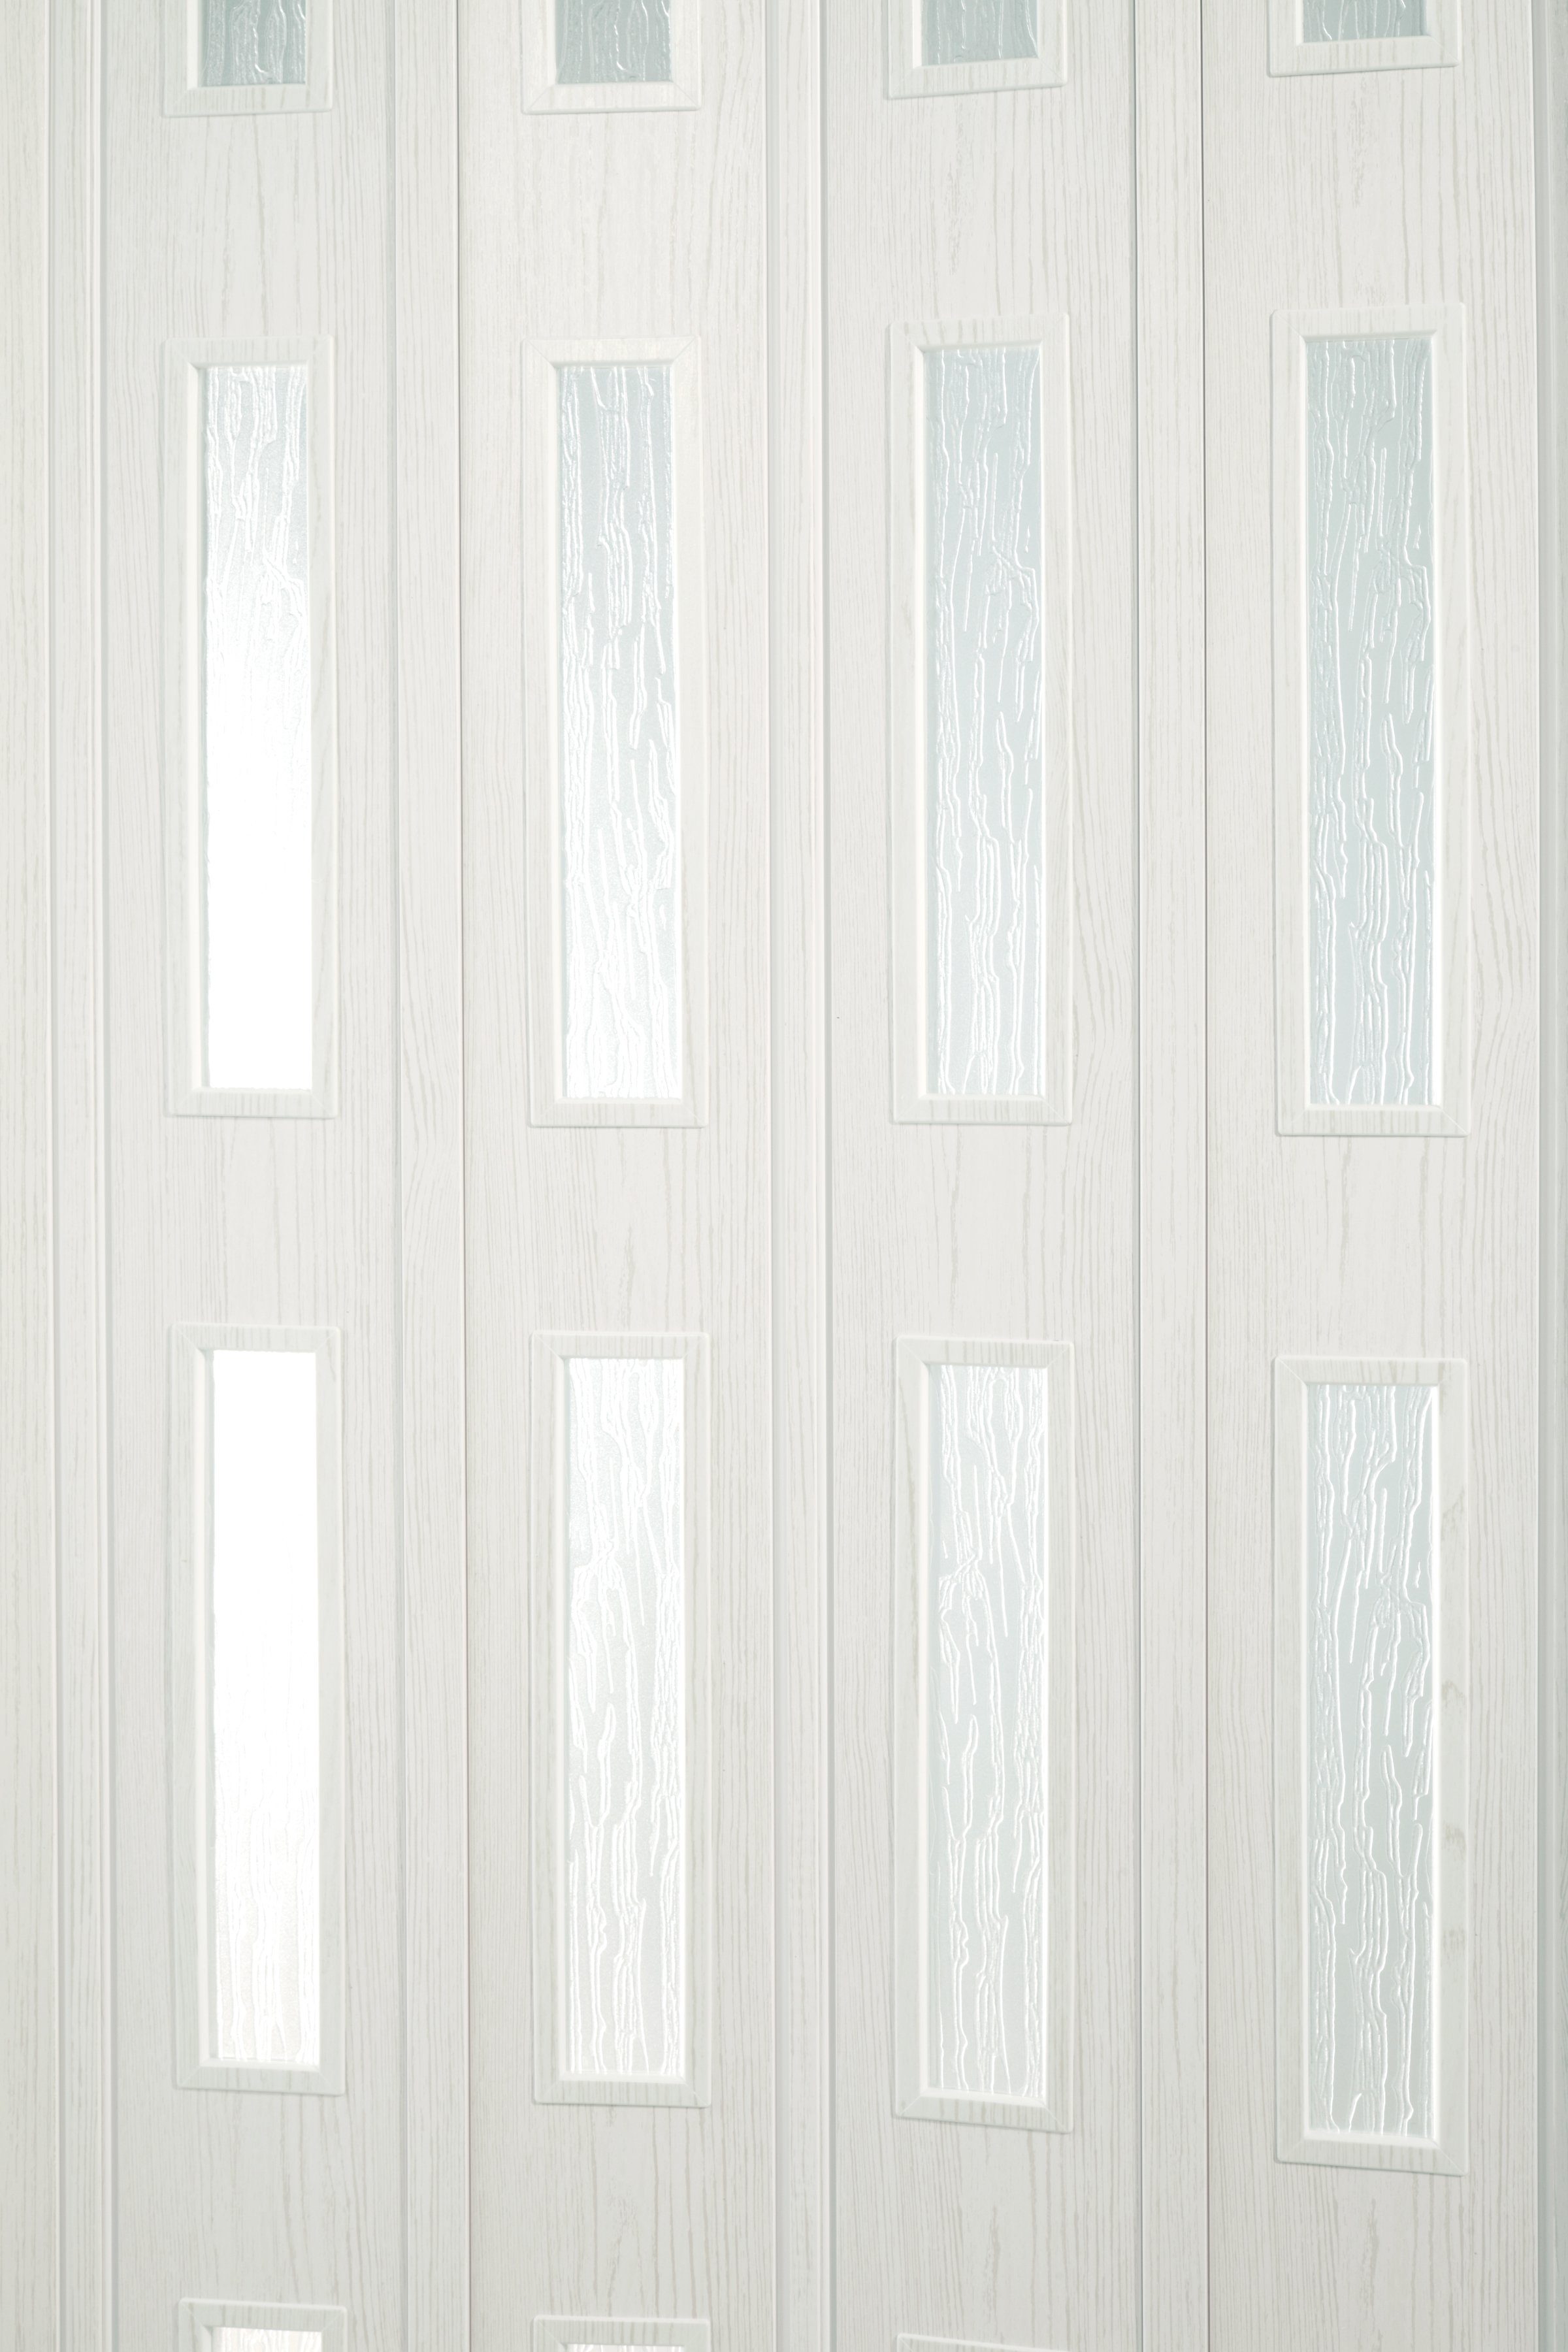 4 Falttür Festmaß cm x m. 202 Fenster, Luciana, eiche weiß, Forte 88,5